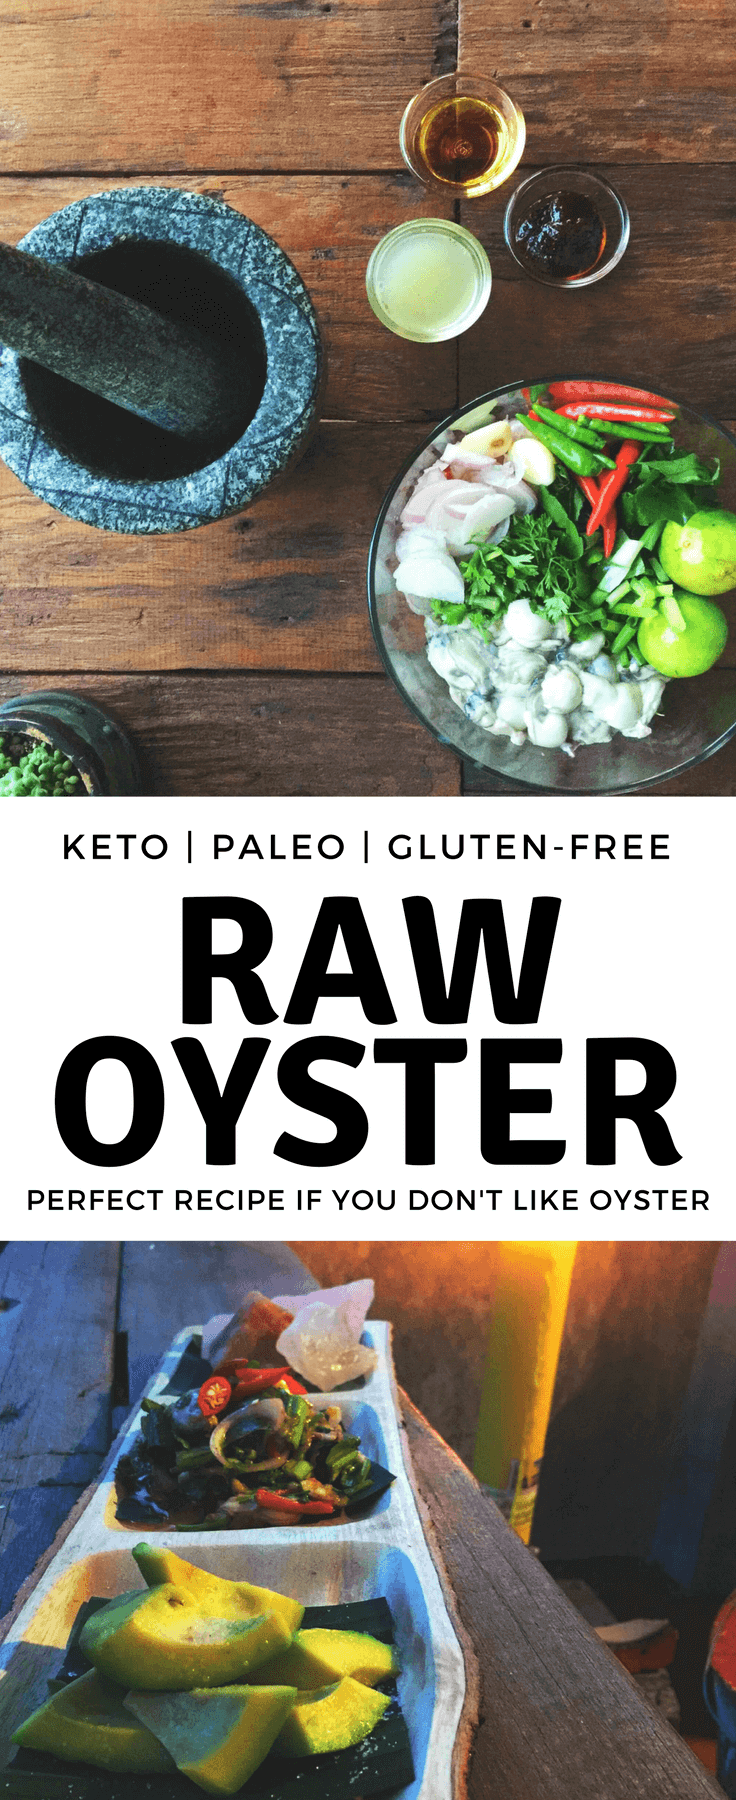 raw oyster recipe